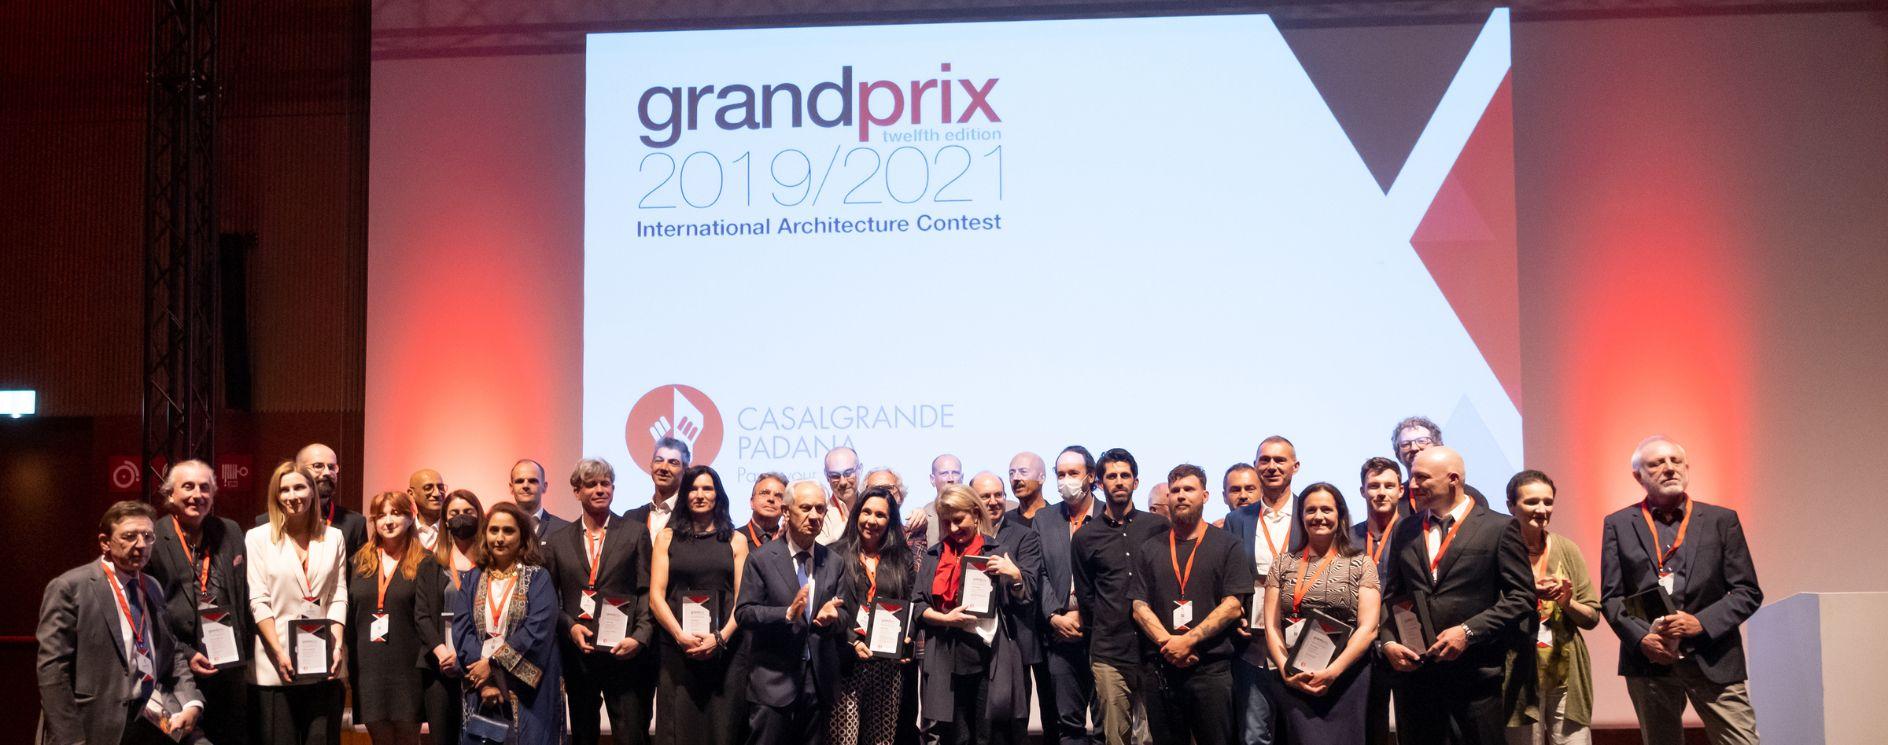 International Architecture Contest Grand Prix | Casalgrande Padana